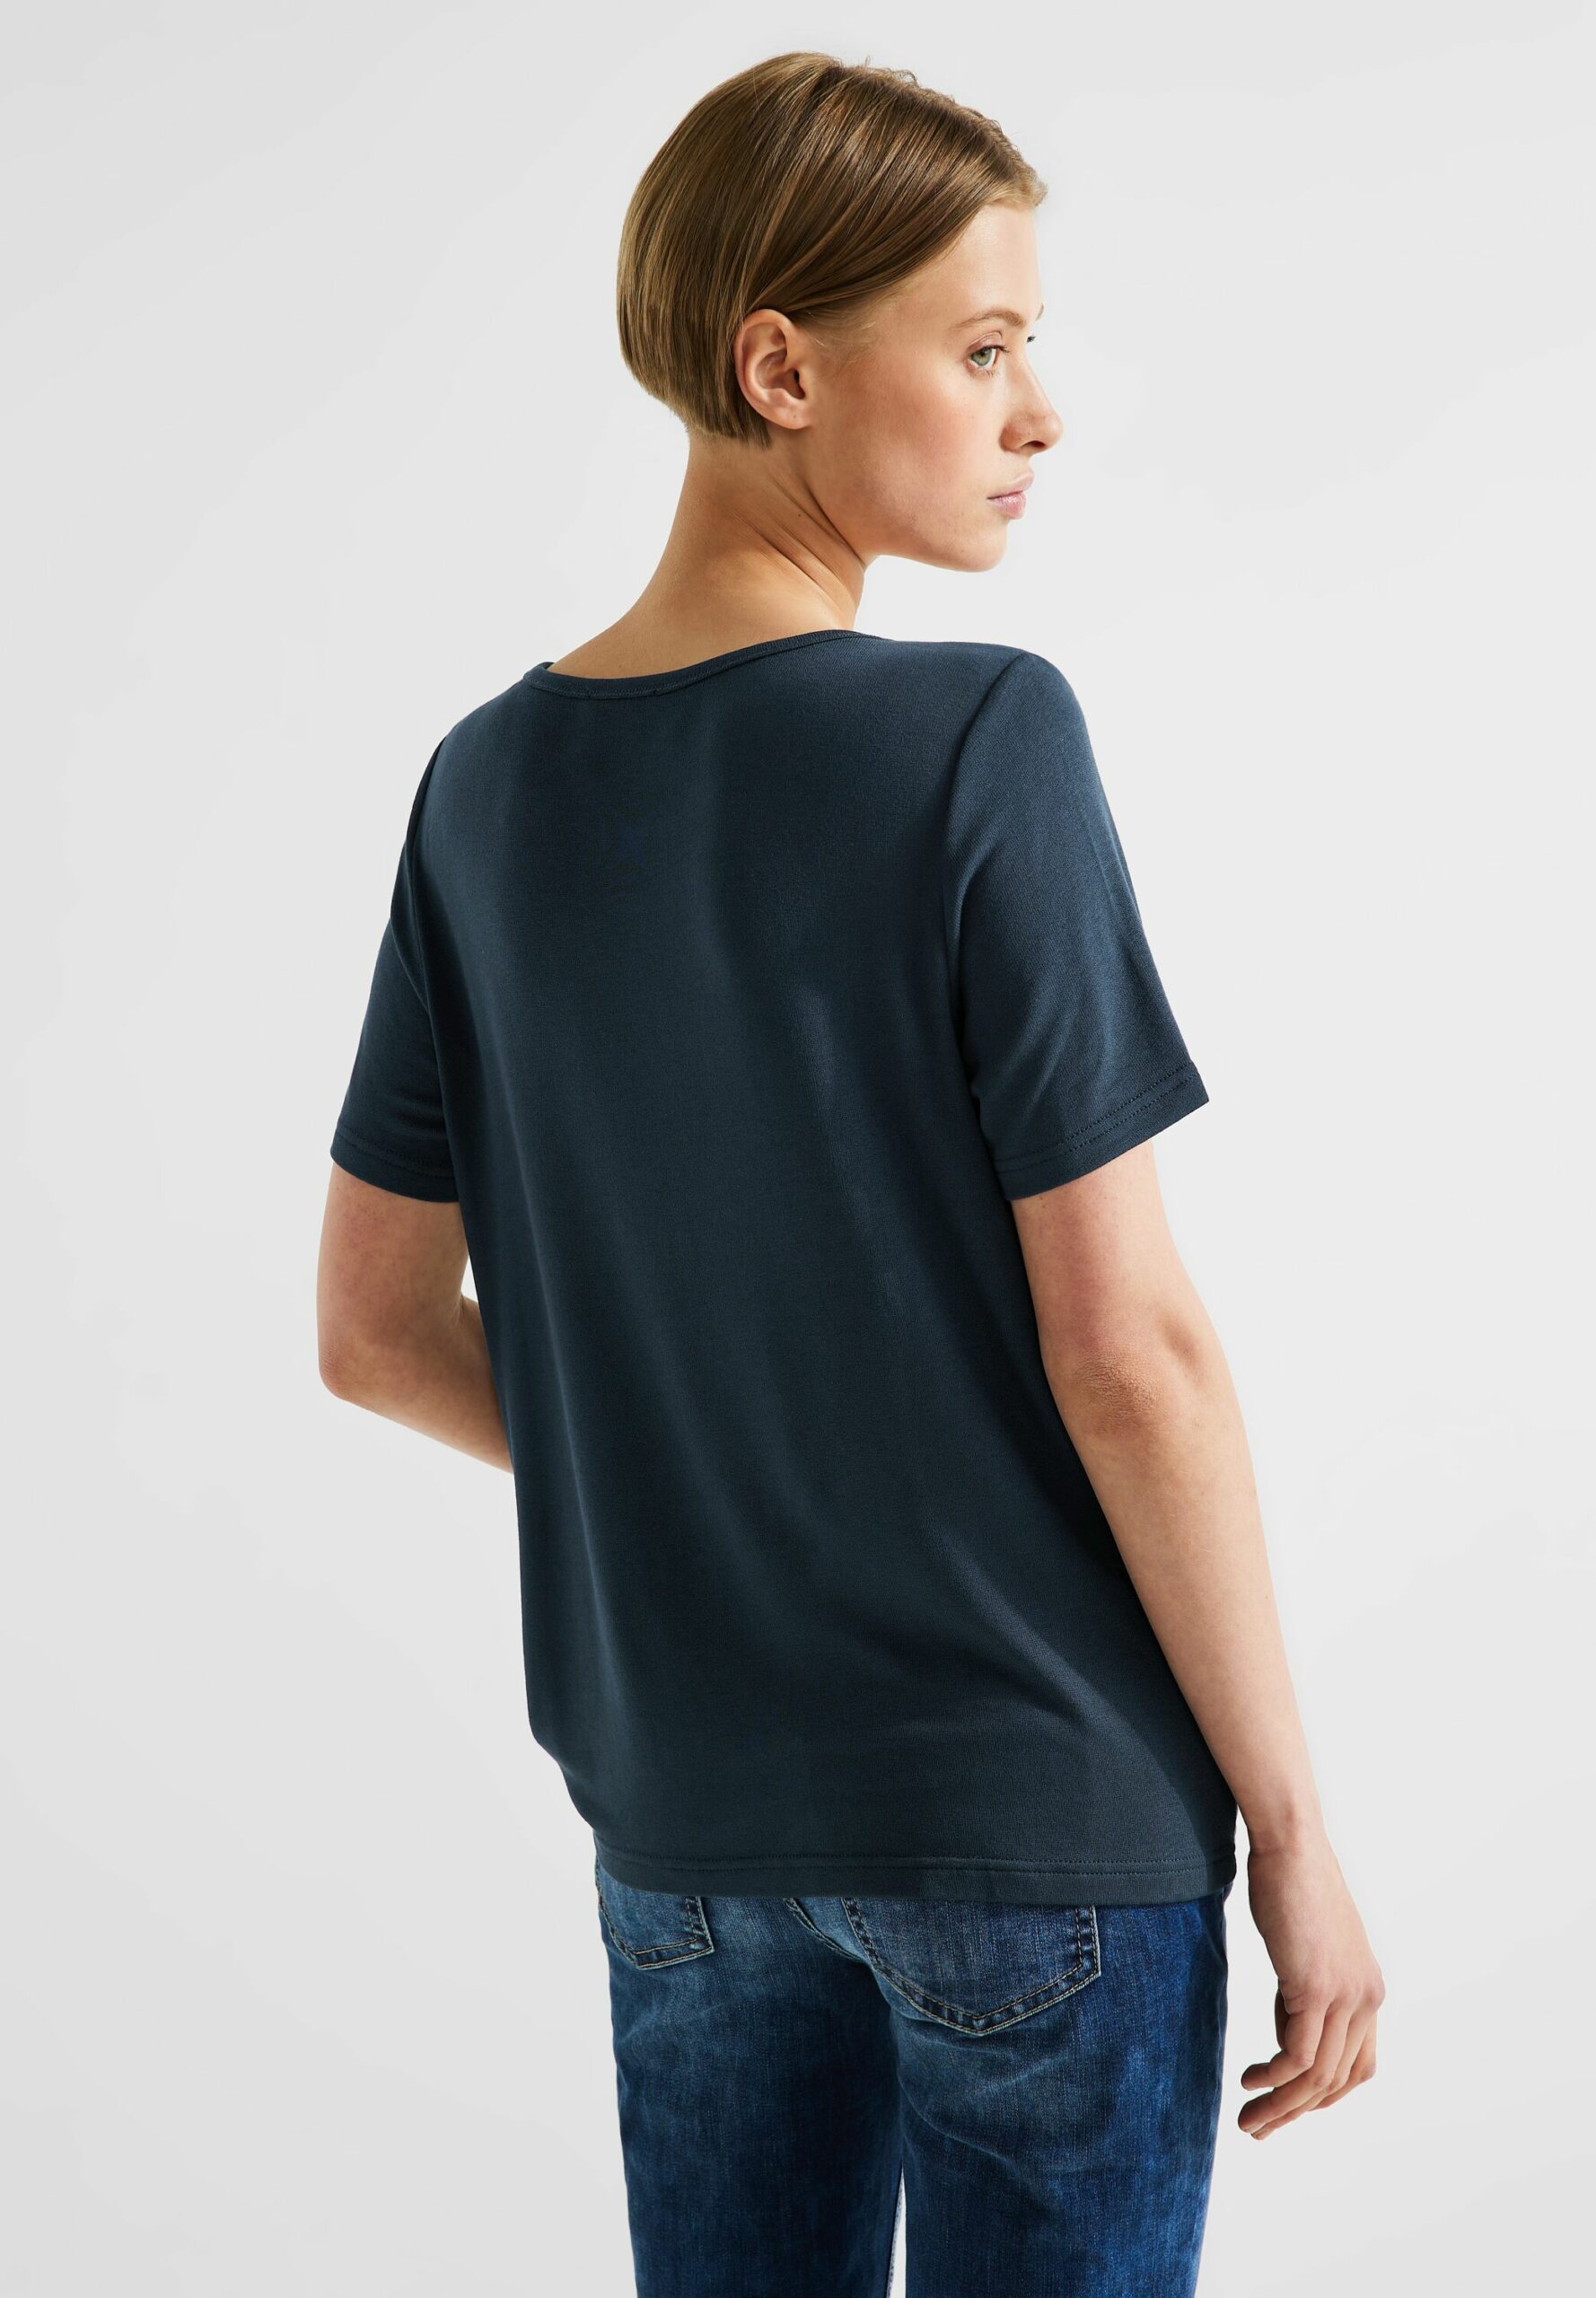 One Webshop Modehaus T-Shirt Street Damen - Kamlage